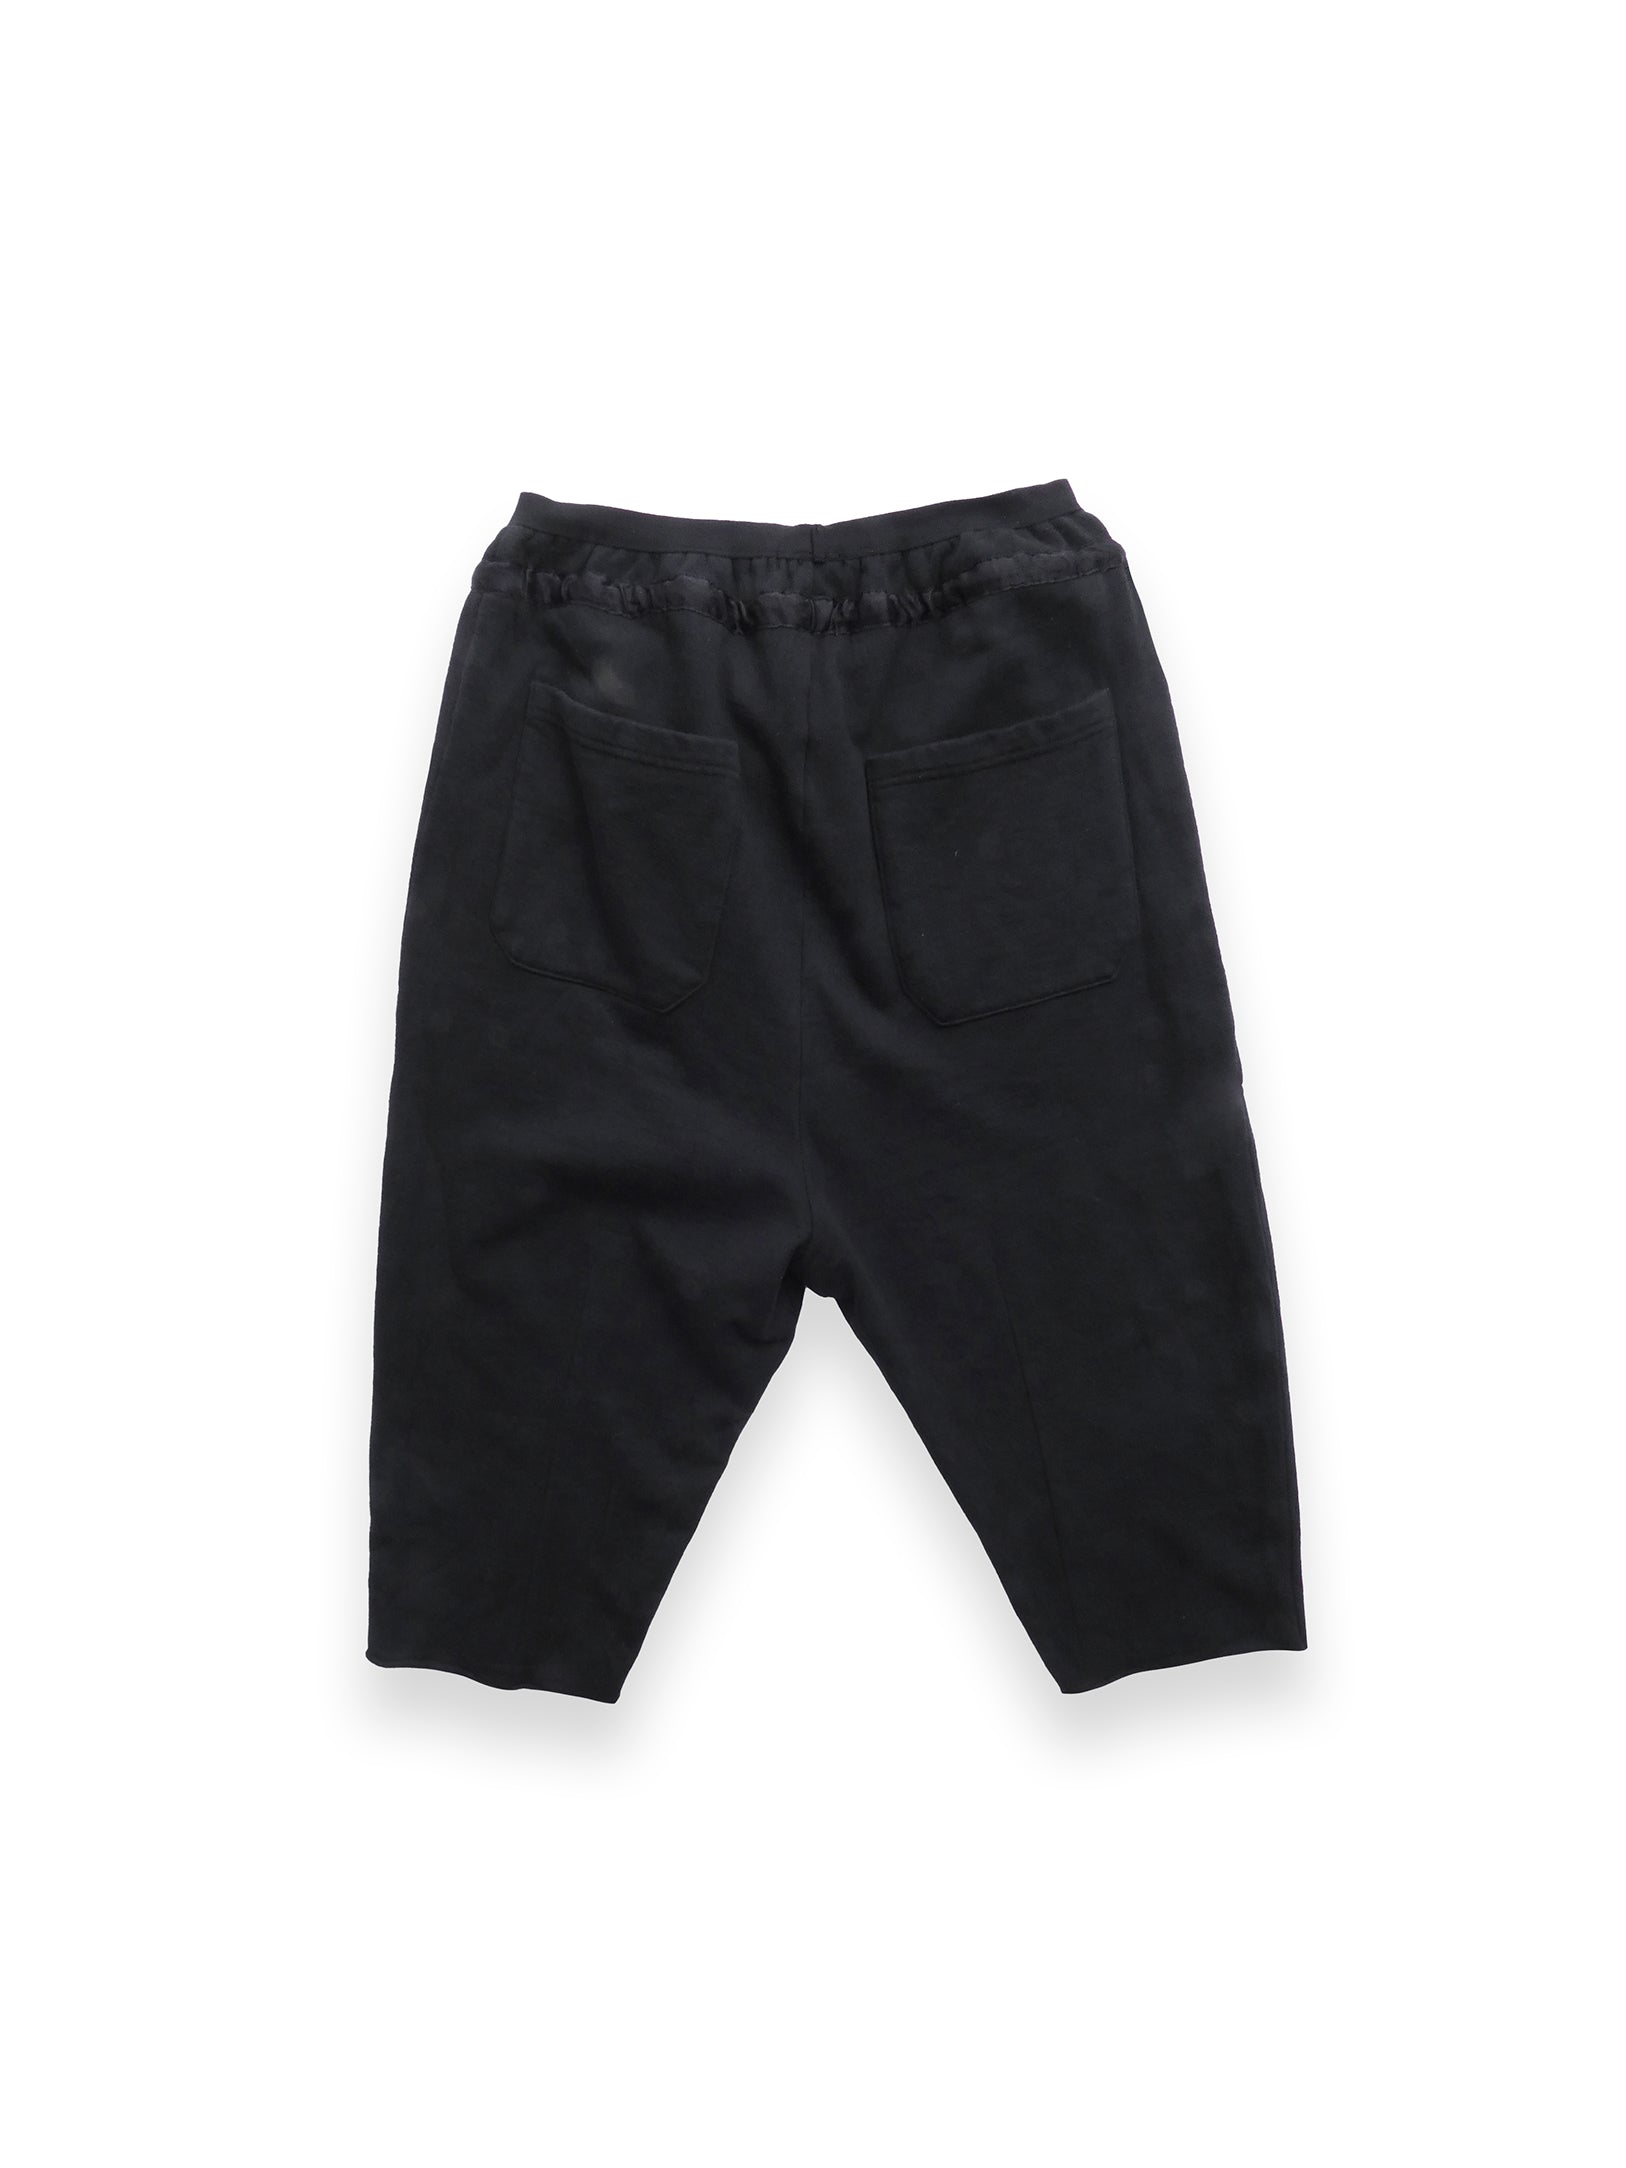 Black 3/4 Length Jogger Shorts